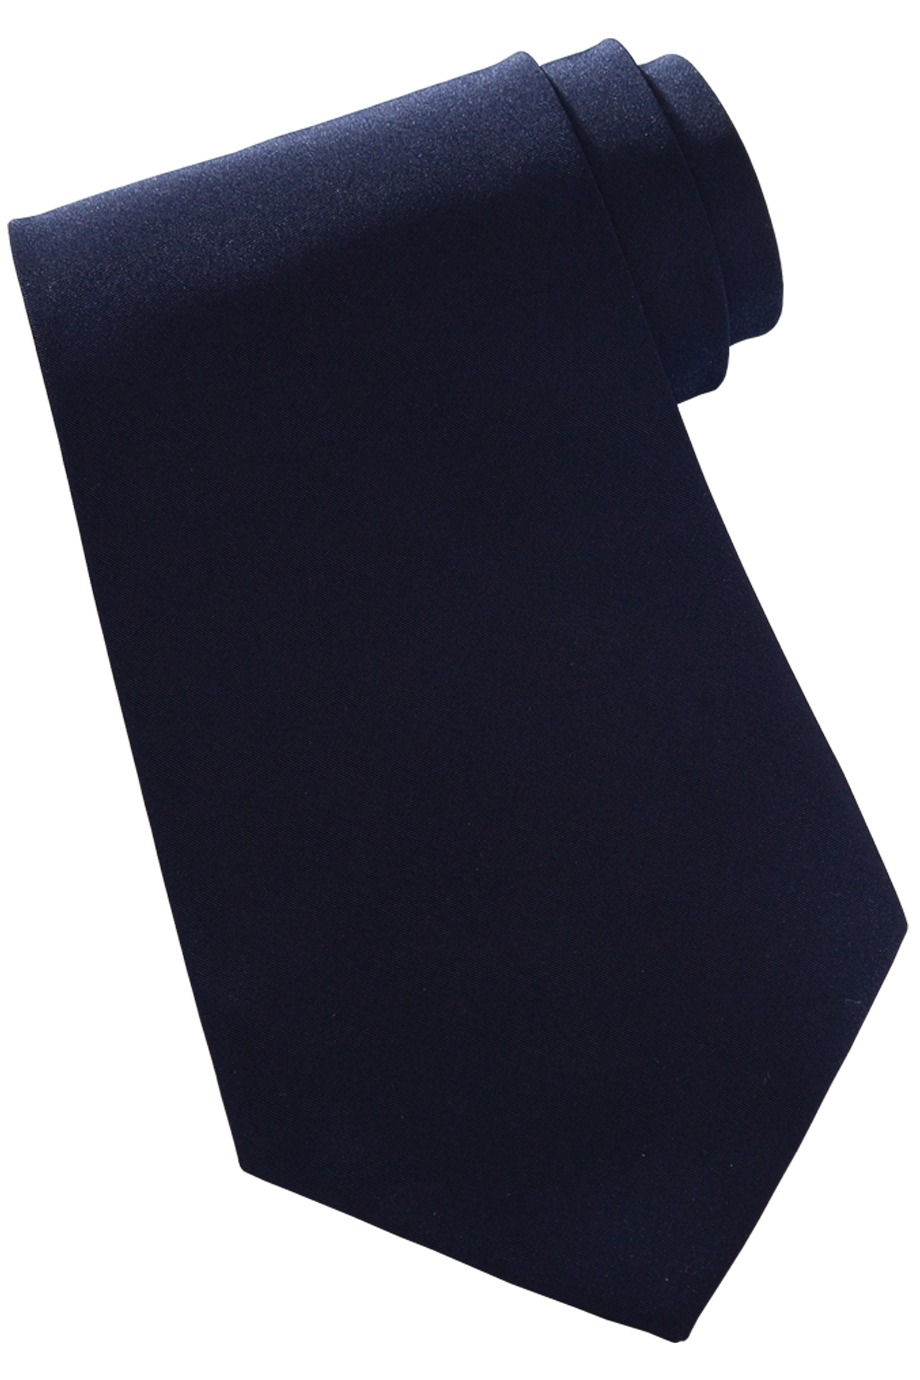 Edwards Garment SD00 - Solid Tie